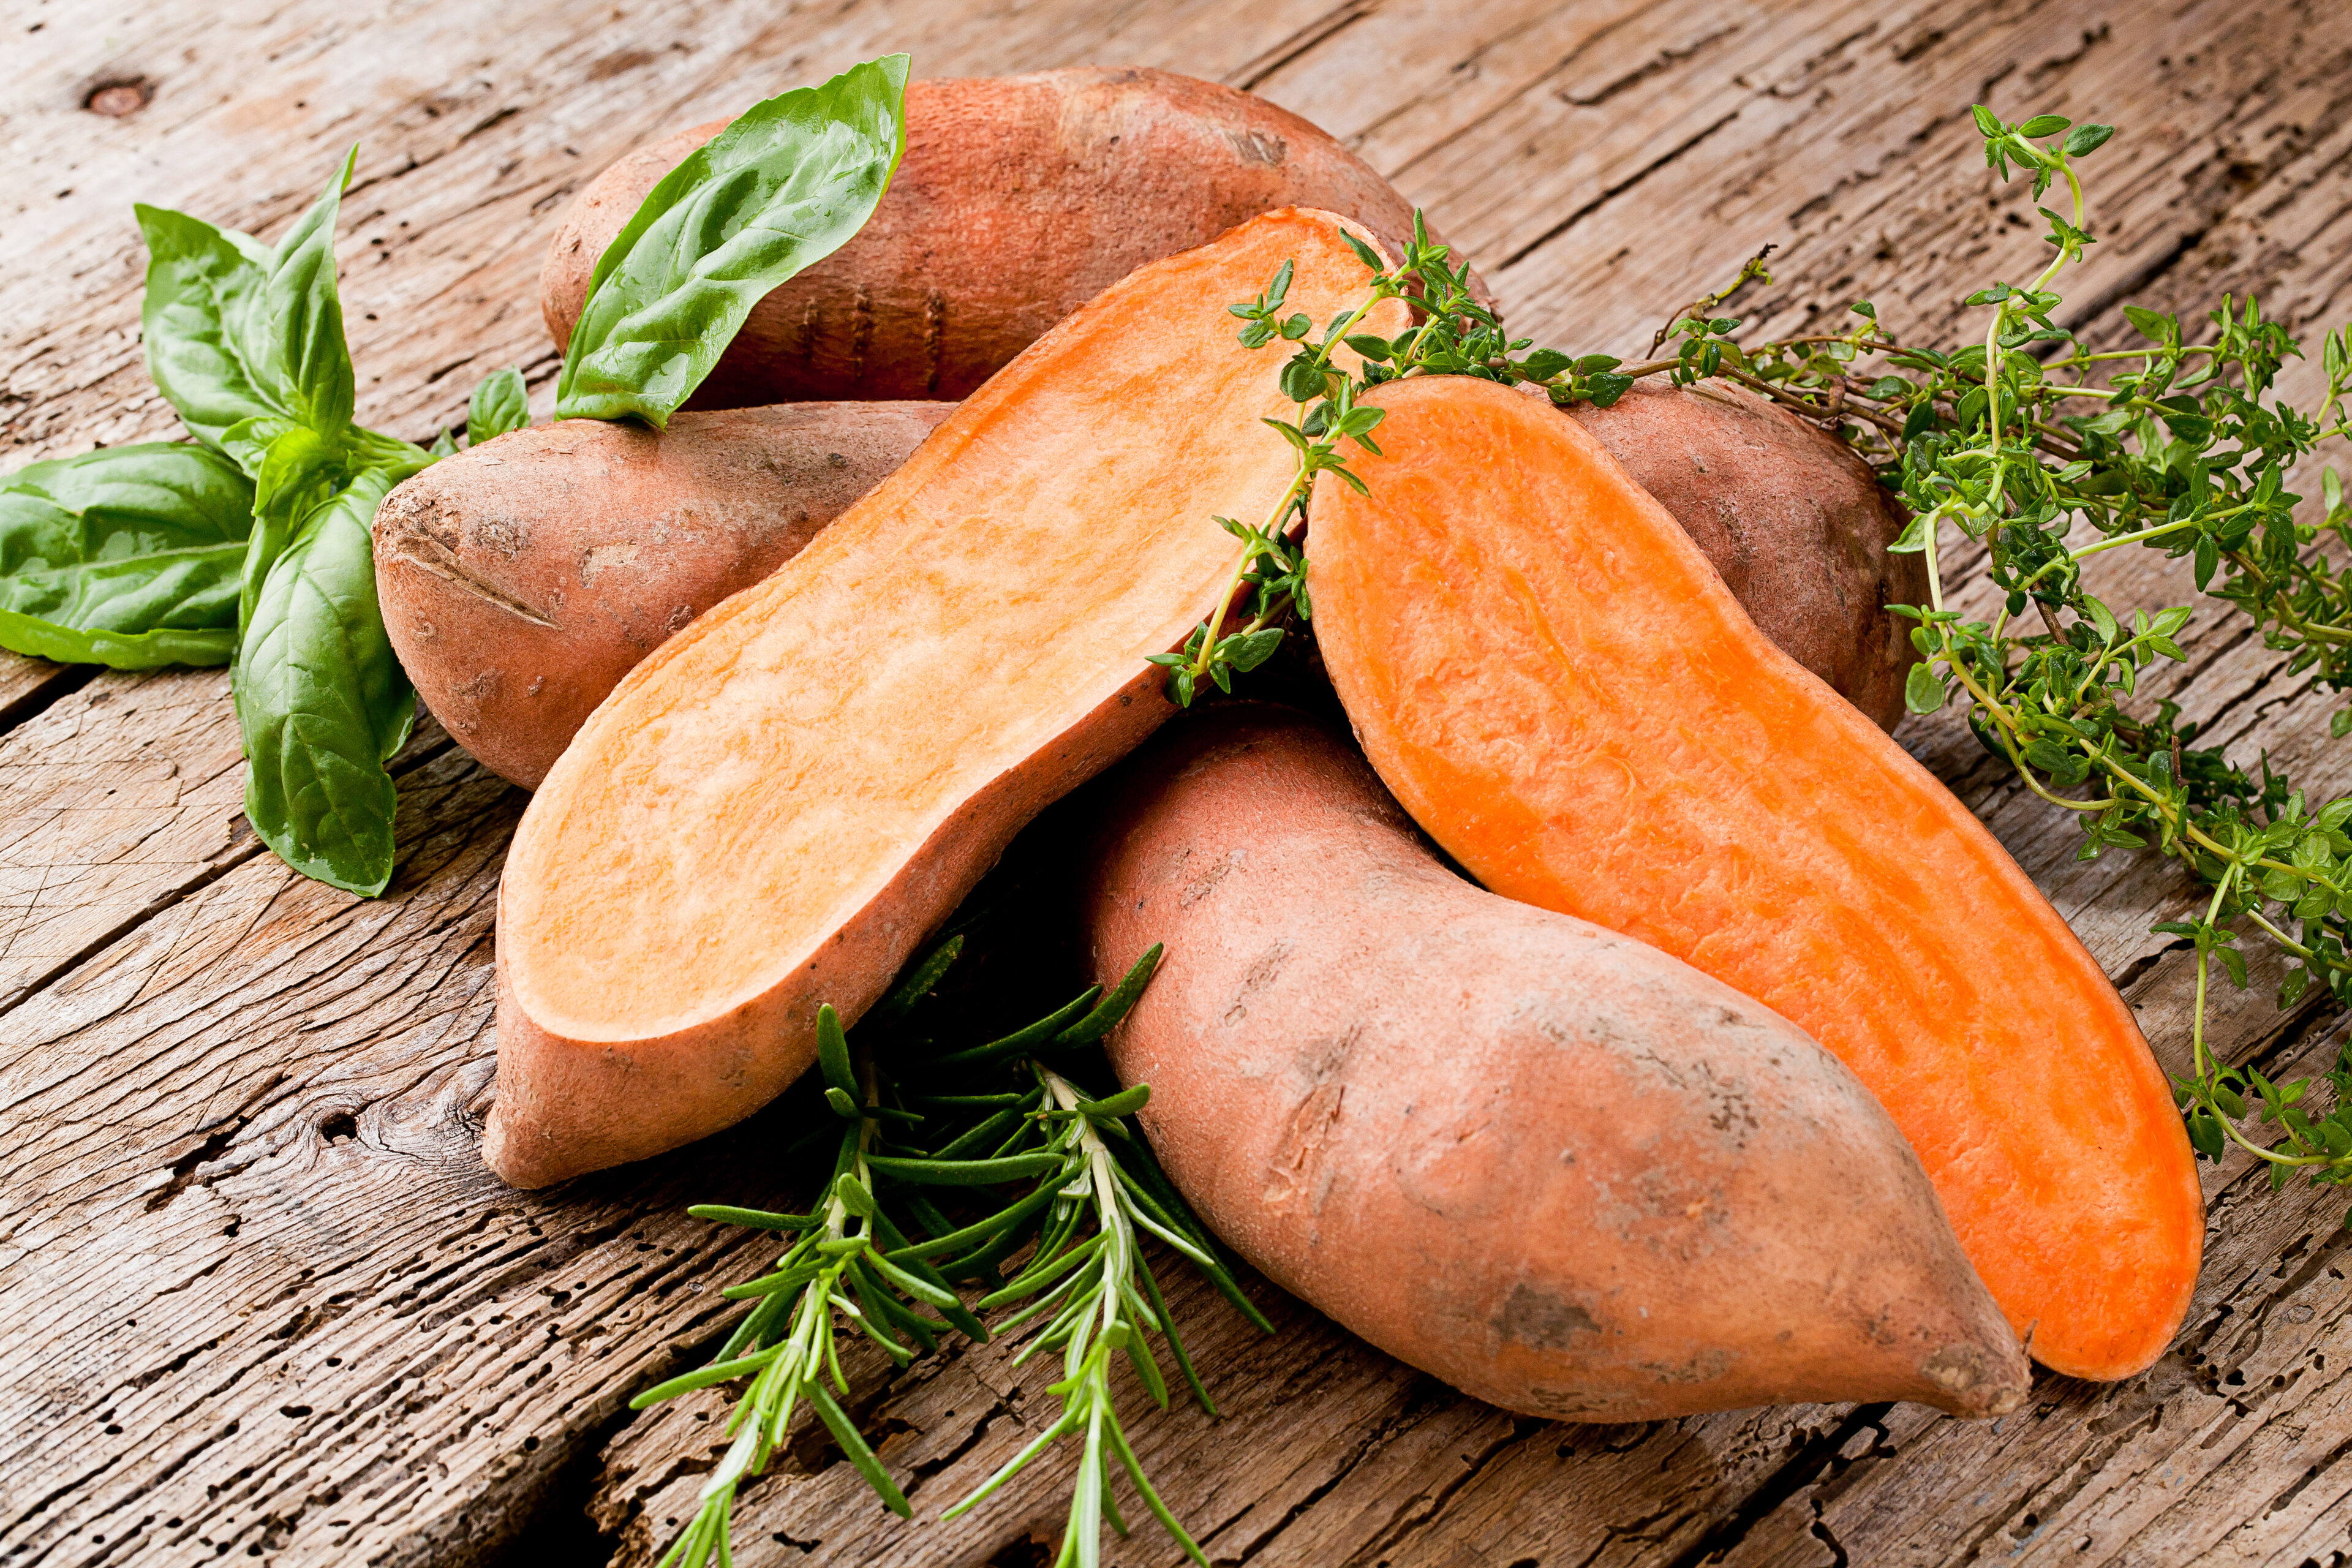 Sweet potatoes: Vitamin A for hair growth